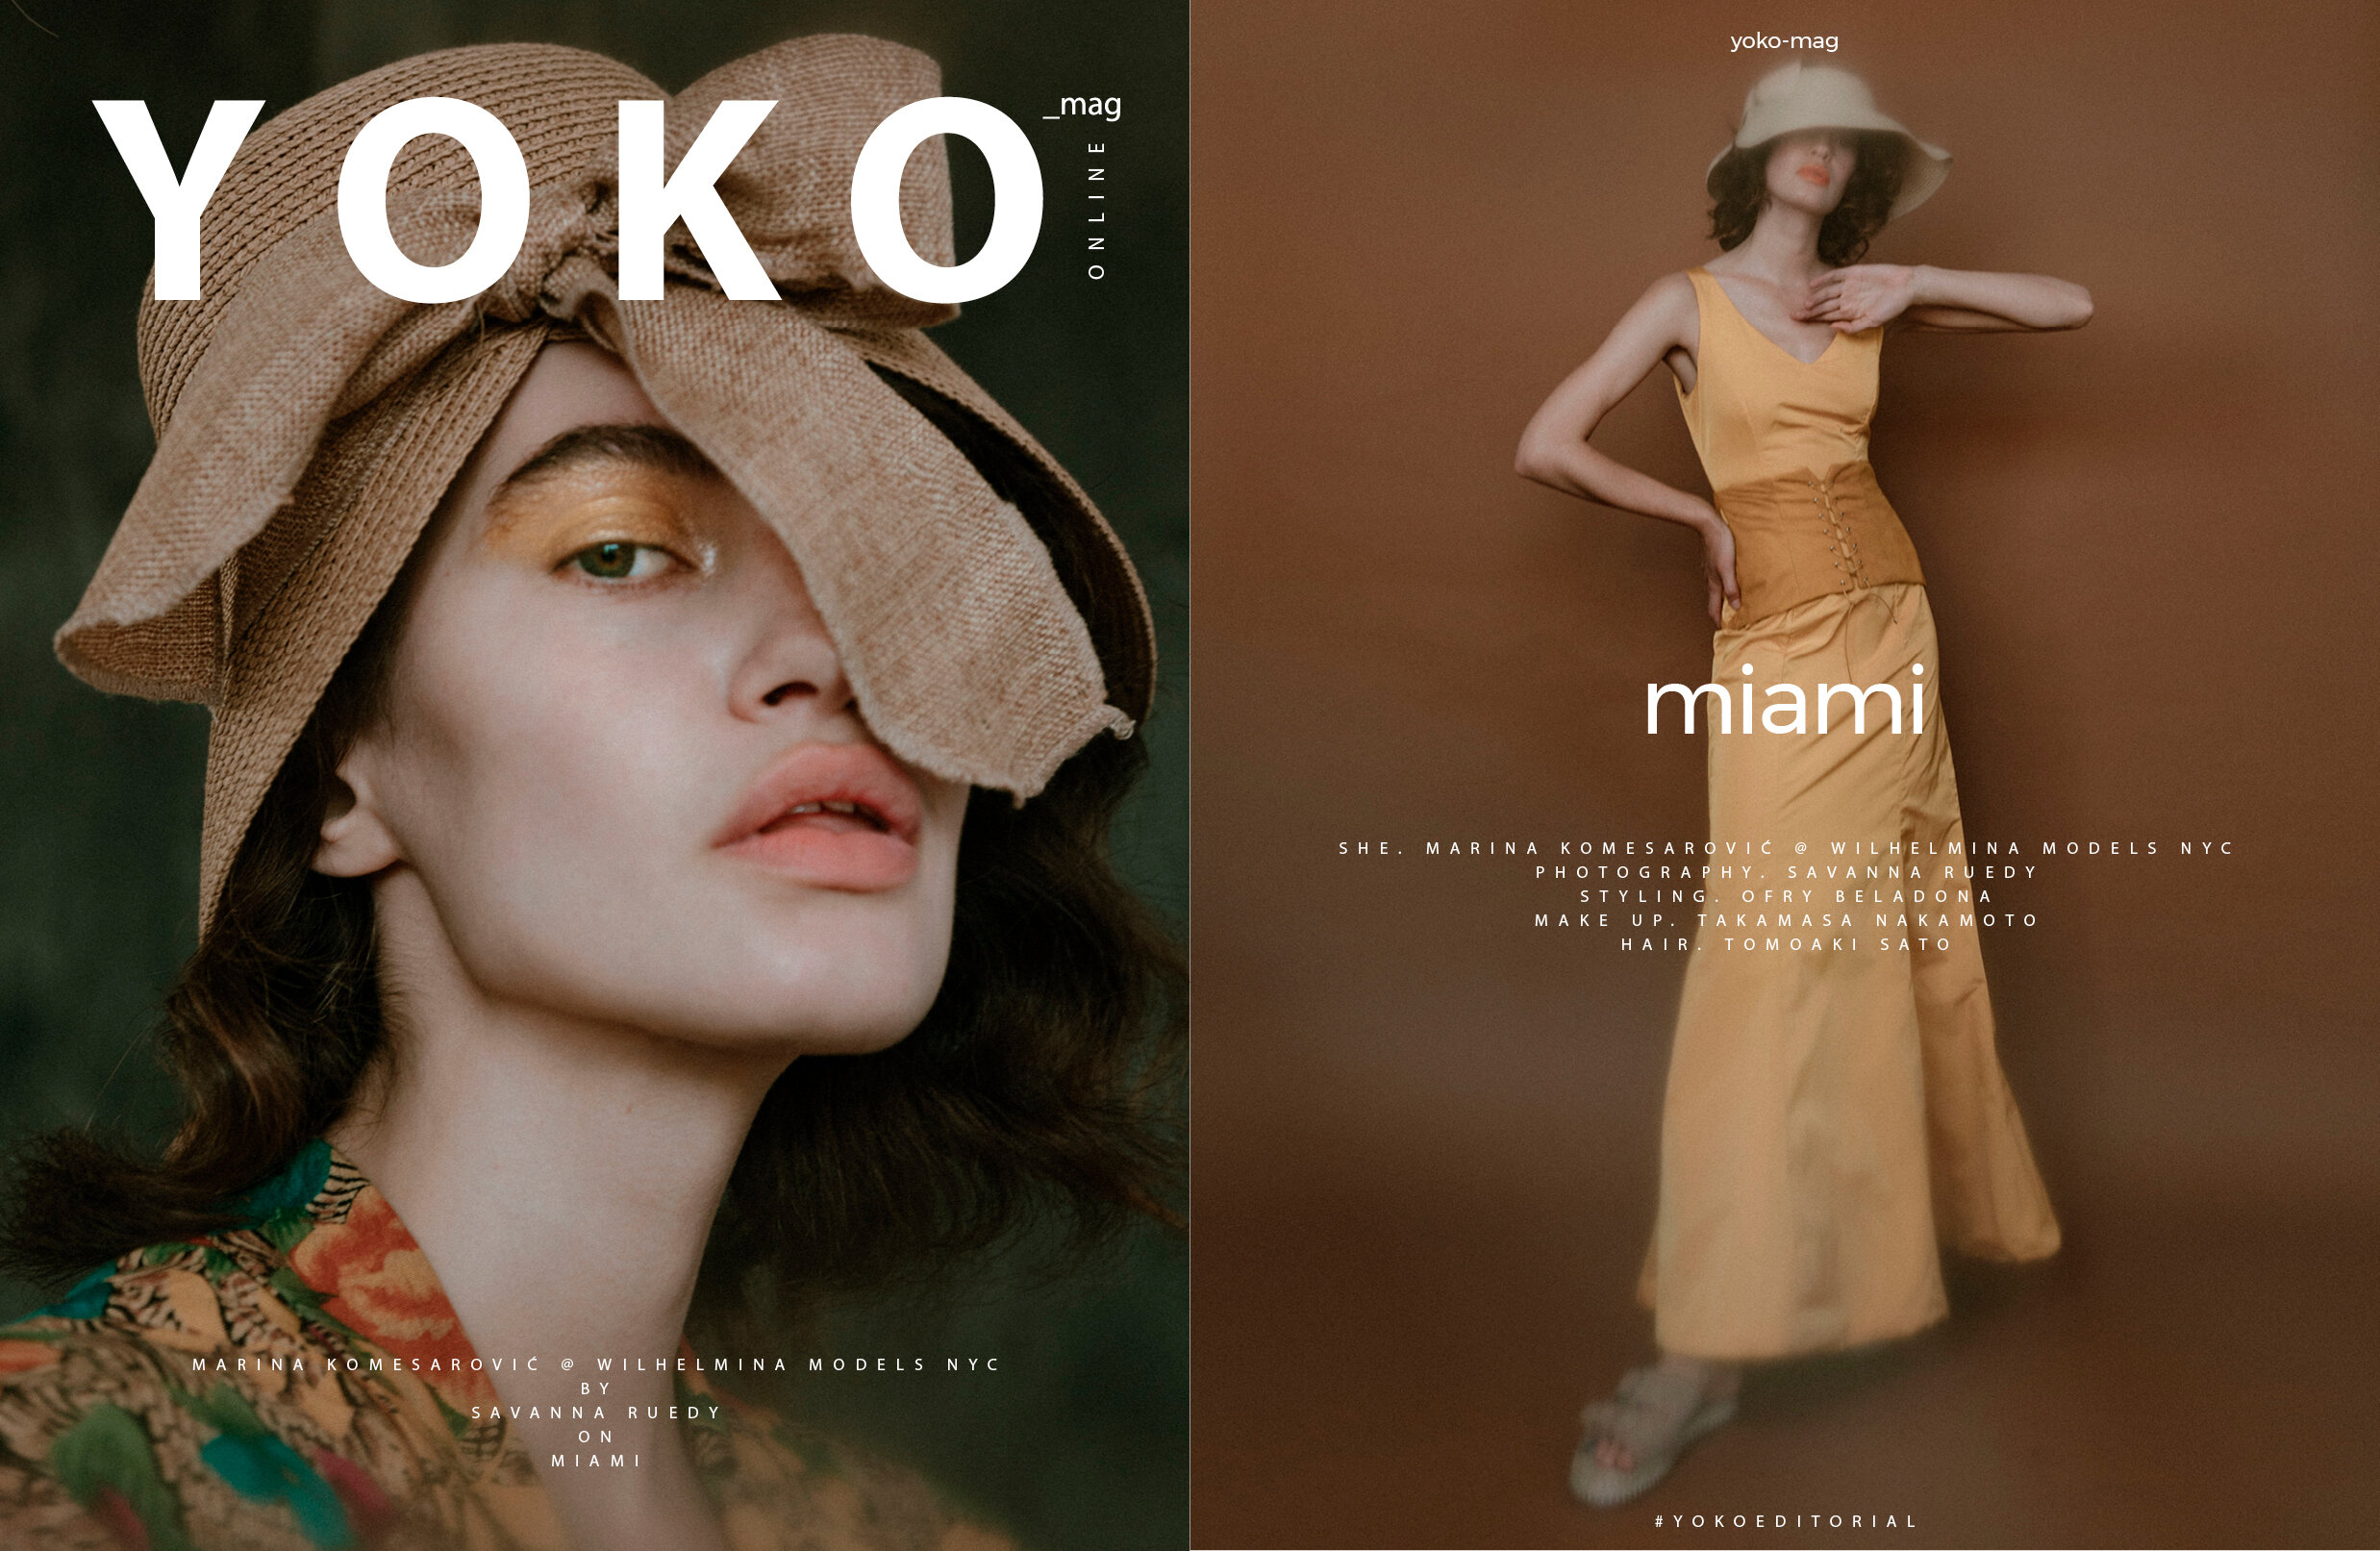 Yoko Magazine - Miami.jpg